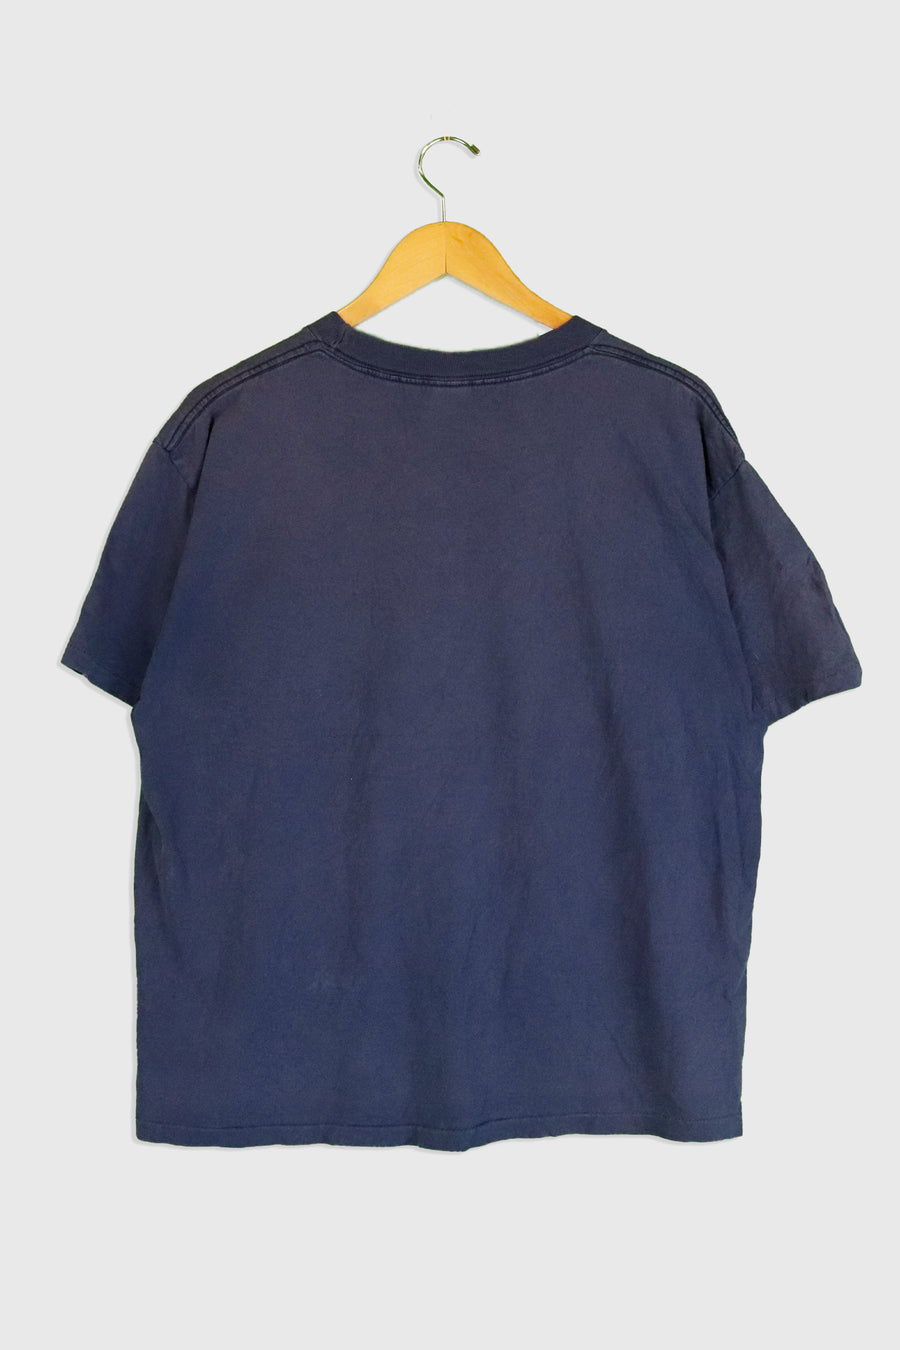 Vintage Michigan Wolverines Graphic T Shirt Sz XL